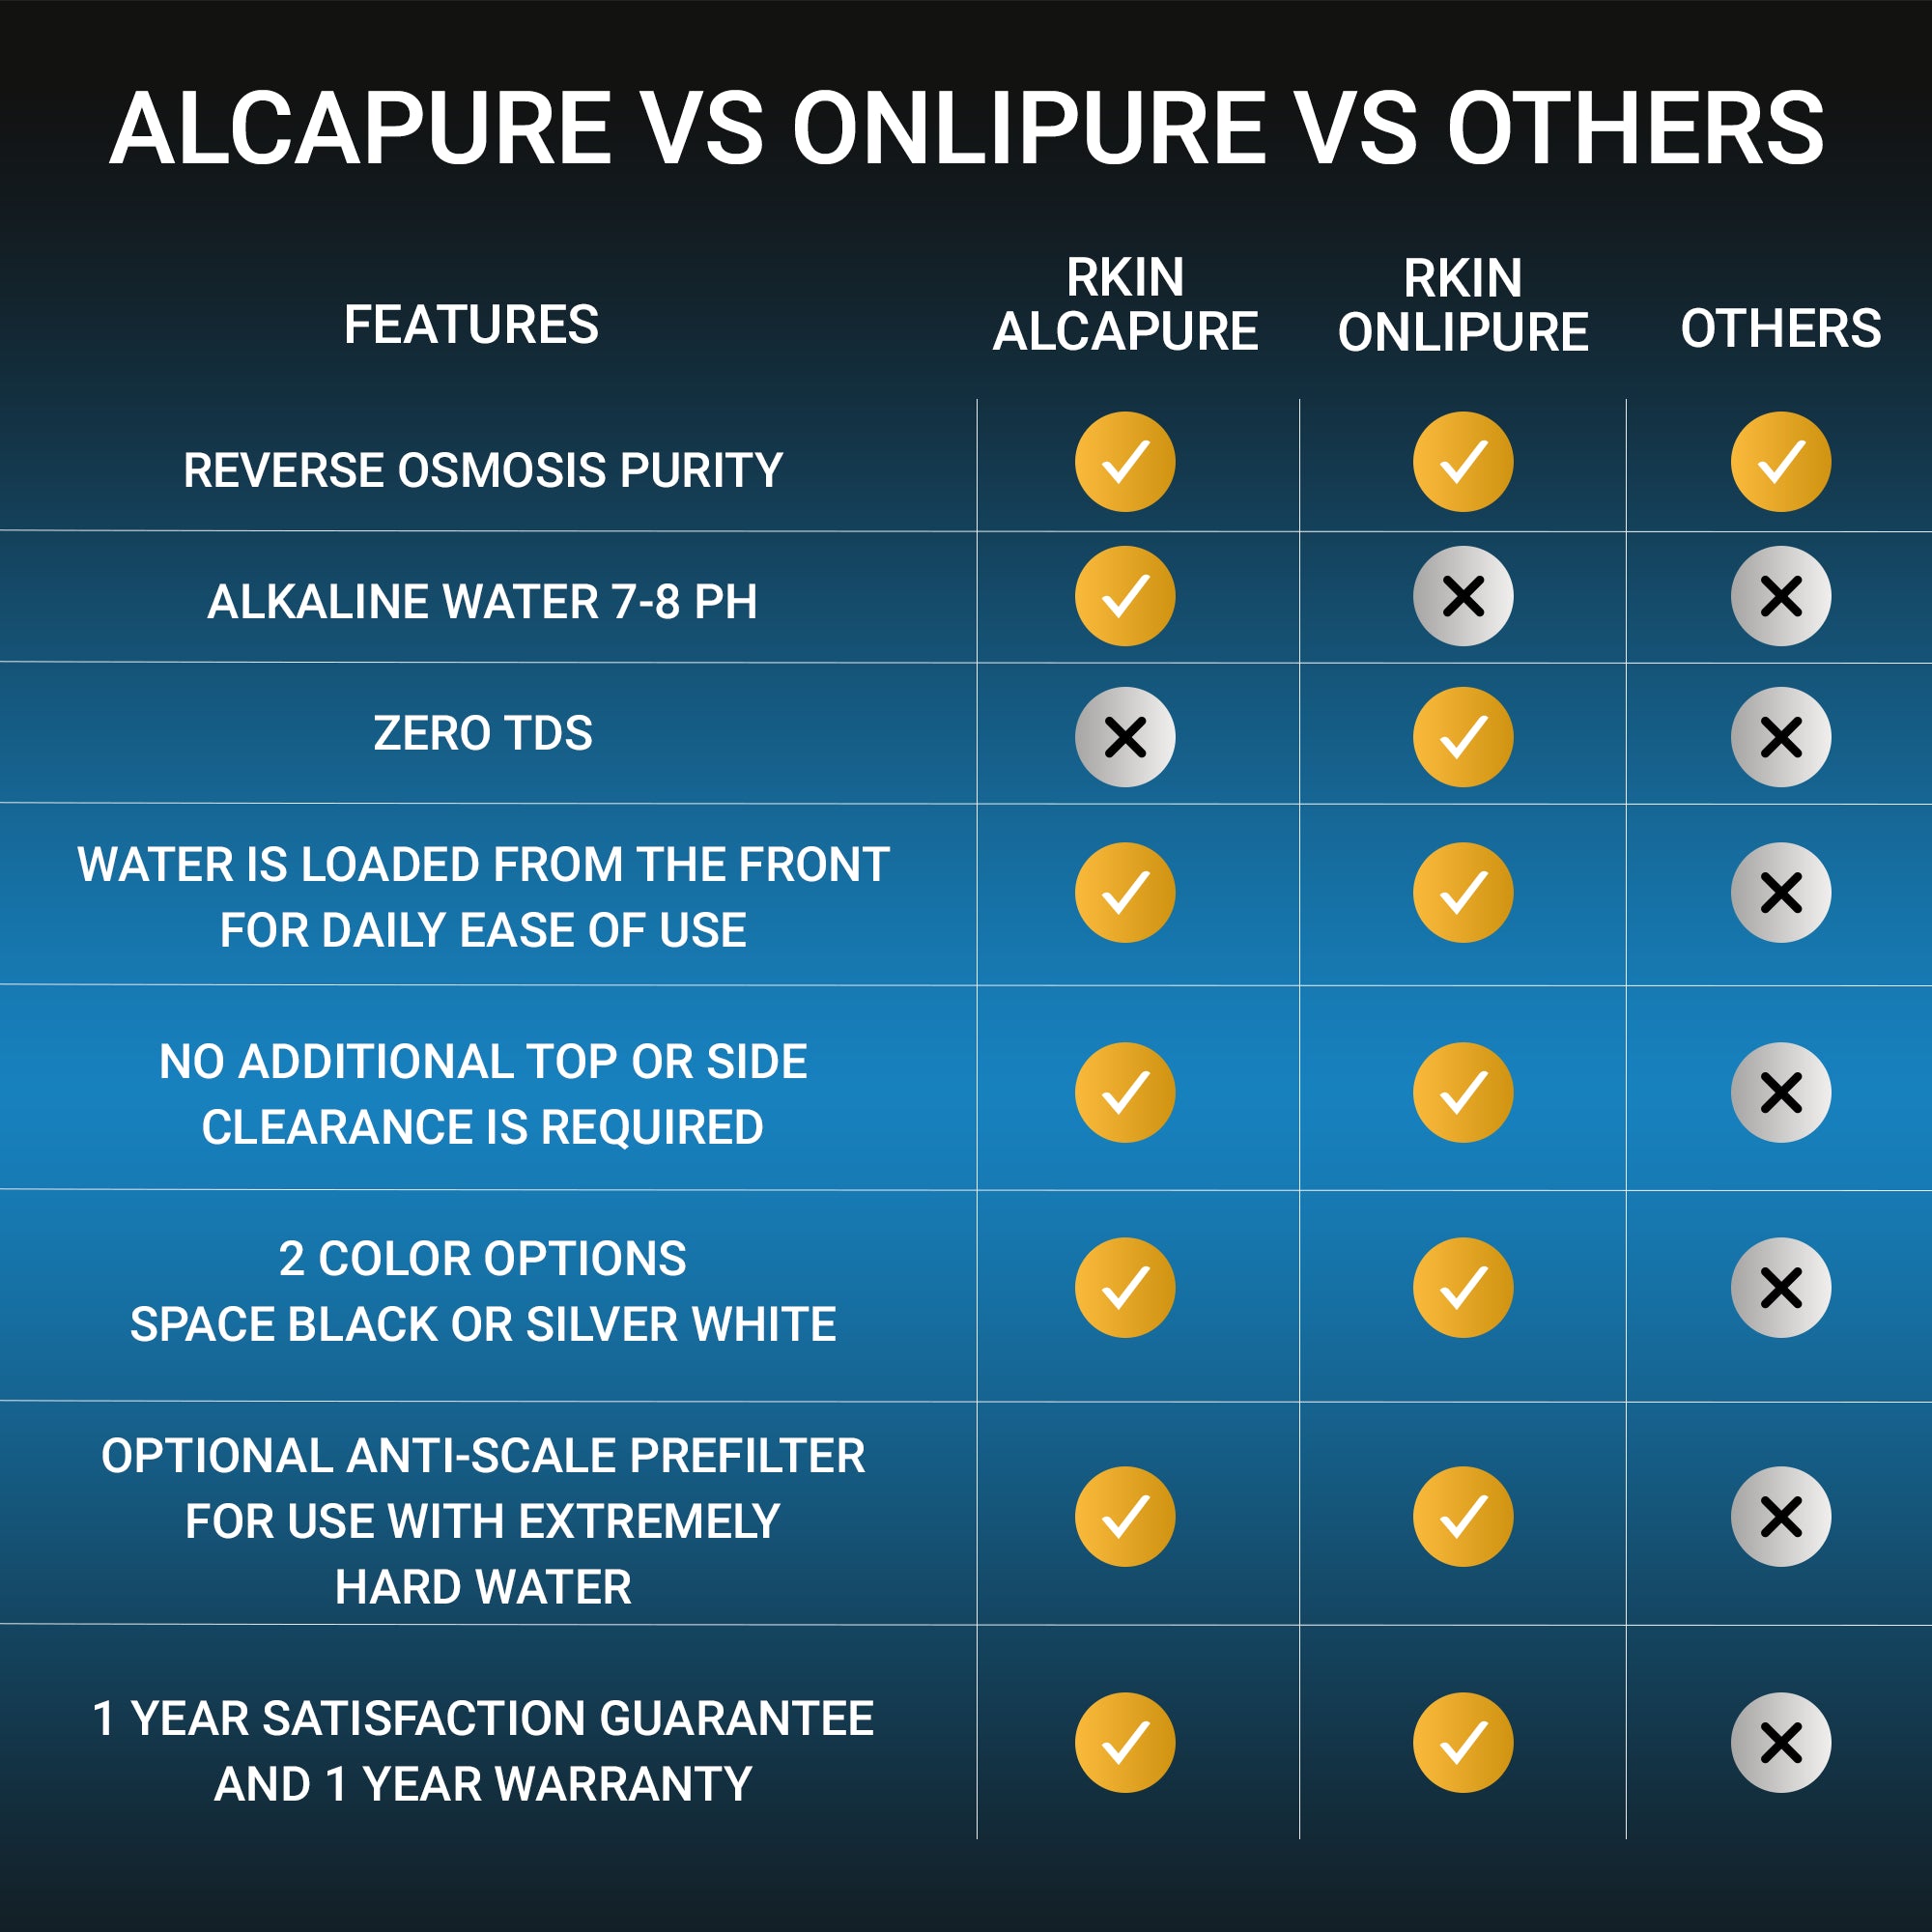 Alcapure vs onlipure vs others